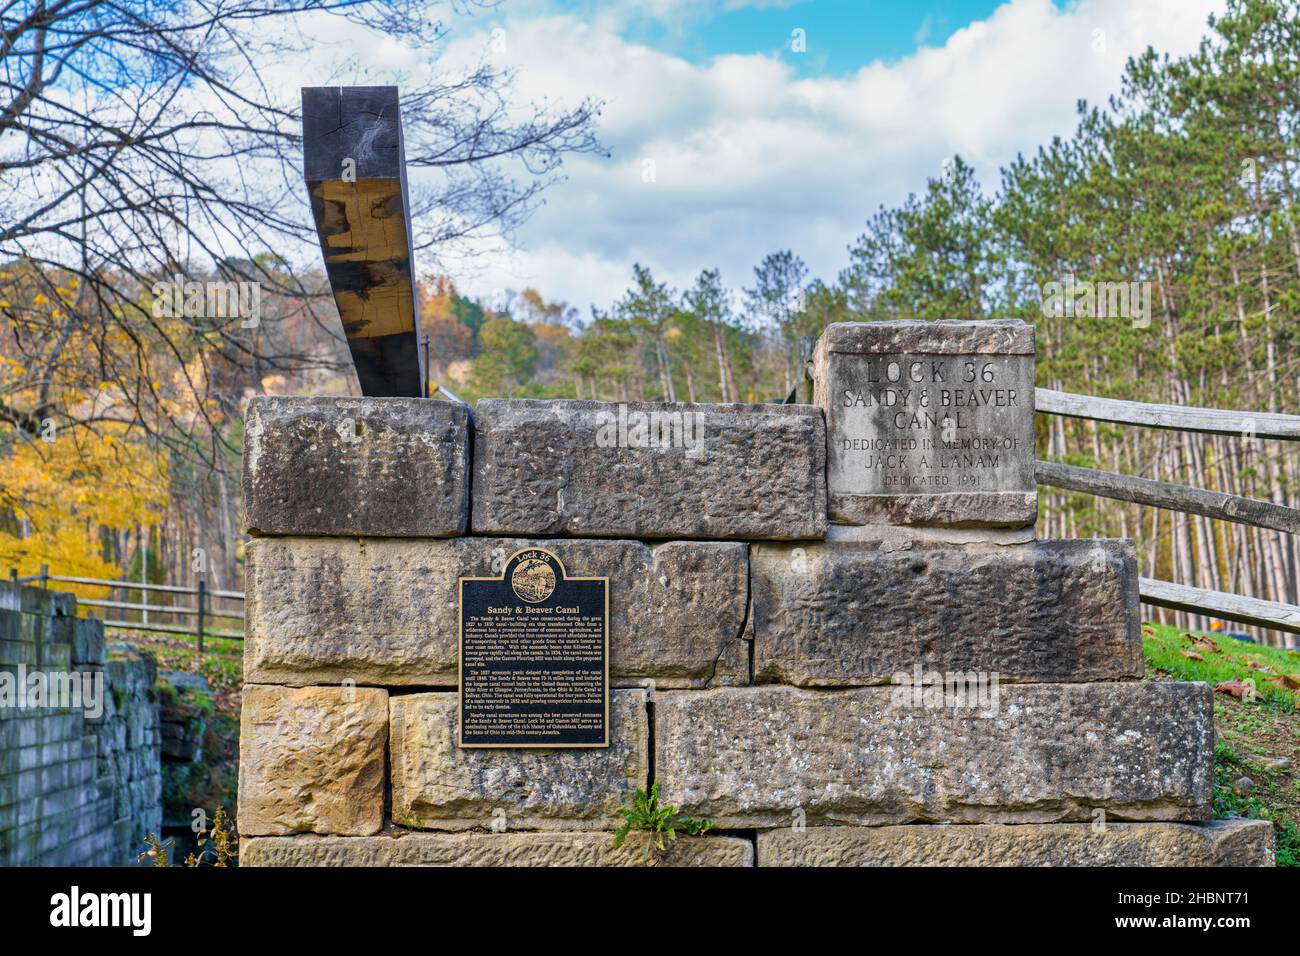 Restaurierte Schleuse 36 des Sandy & Beaver Kanals im Beaver Creek State Park in East Liverpool, Ohio. Stockfoto